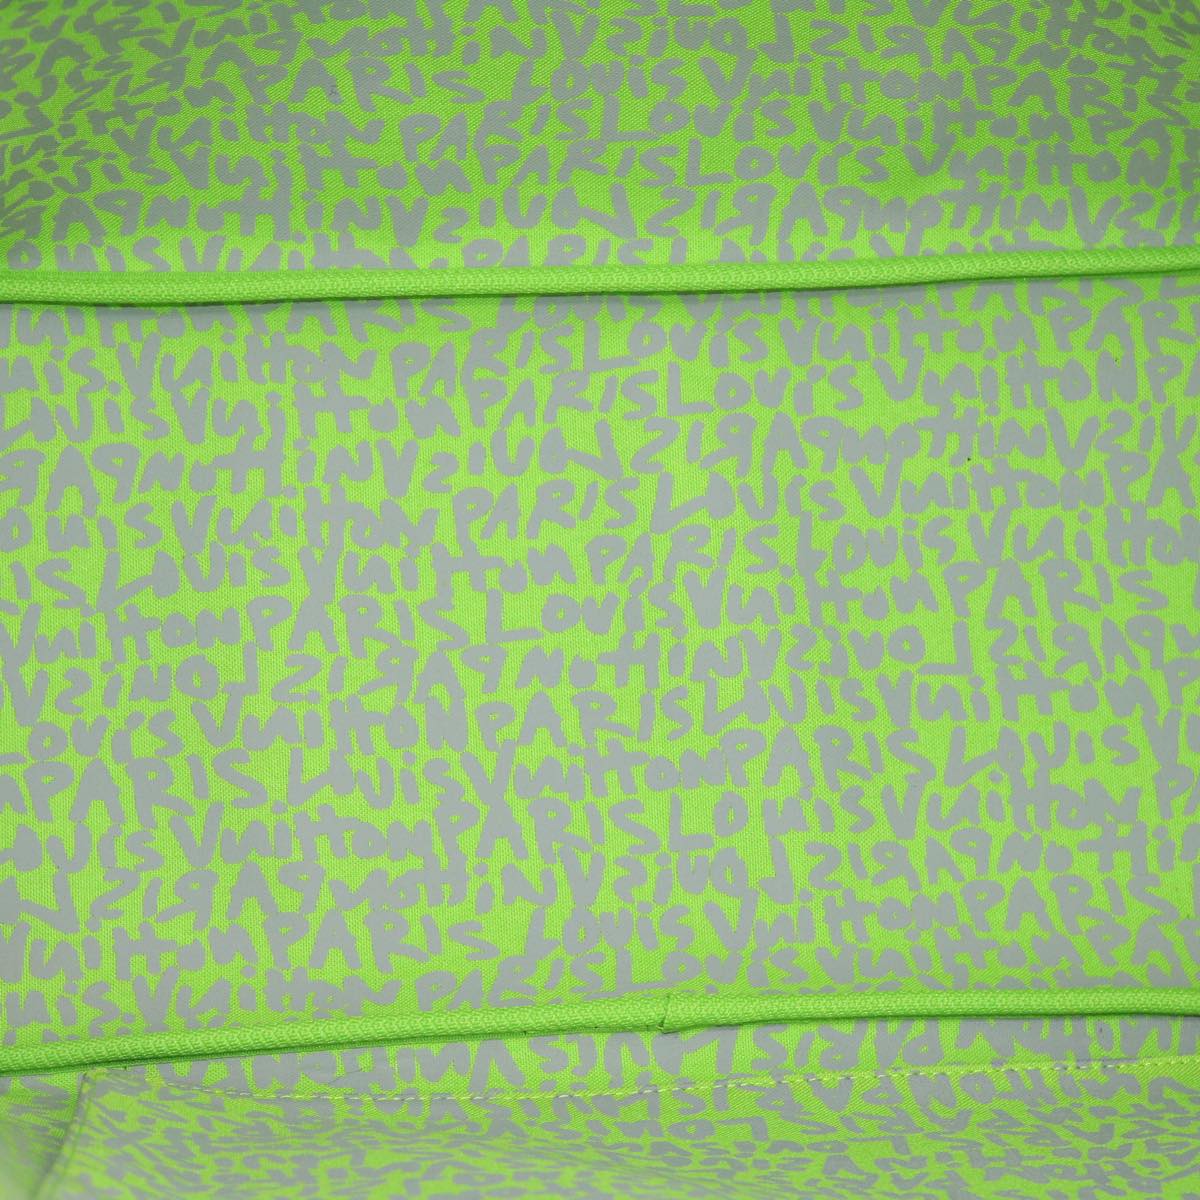 Louis Vuitton by Marc Jacobs Neverfull GM graffiti Tote M93703 at 1stDibs   marc jacobs graffiti tote bag, marc jacobs graffiti bag, marc jacobs louis  vuitton graffiti bag